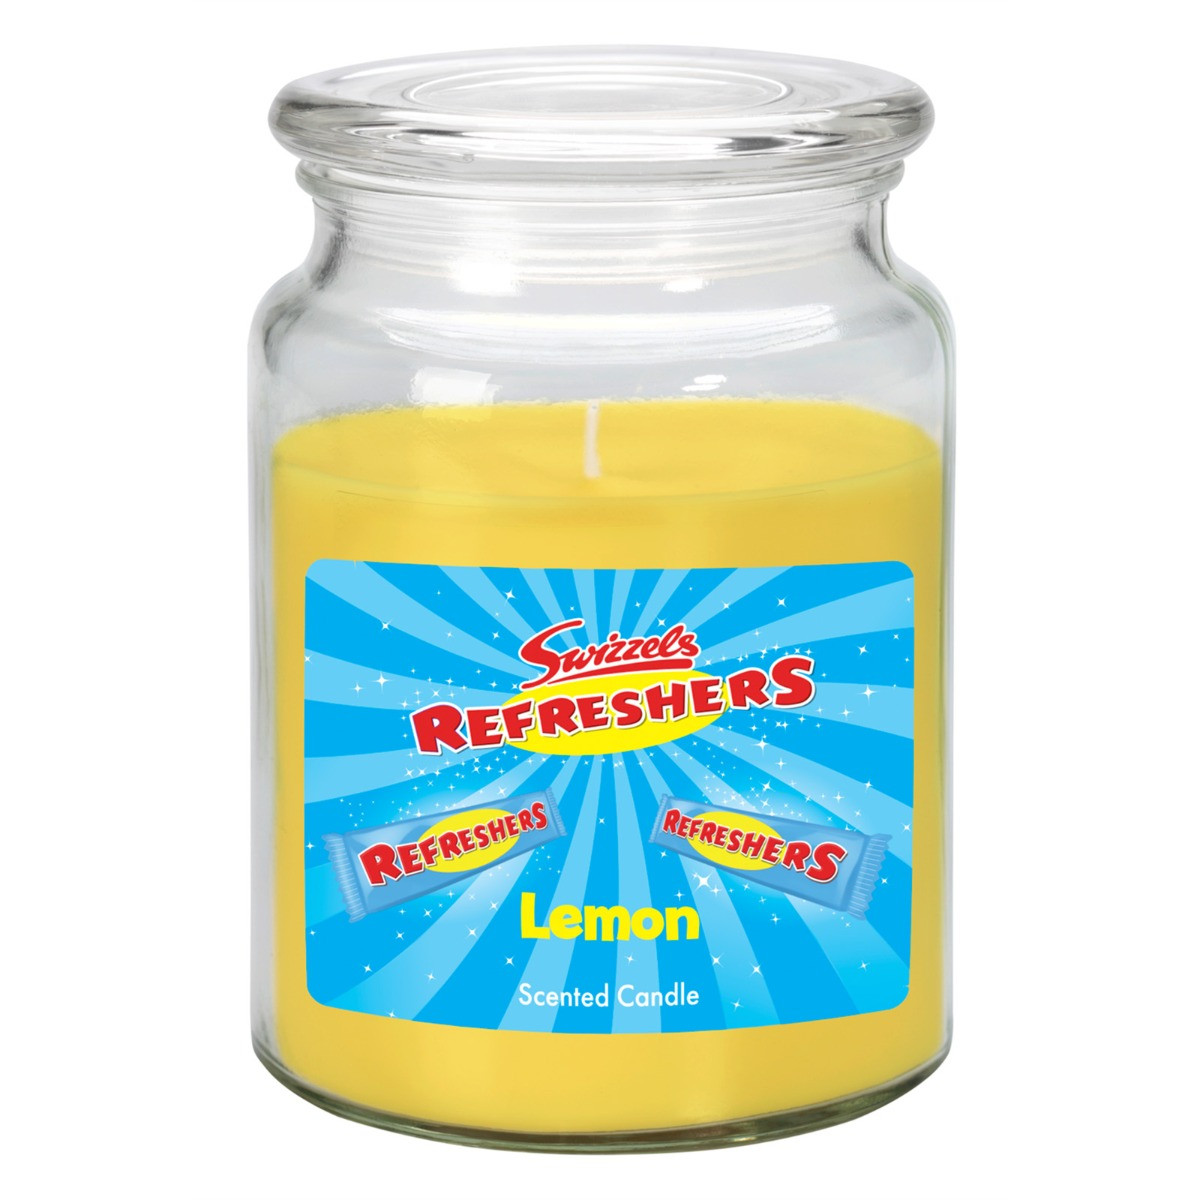 Swizzels 18oz Jar Candle - Lemon Refreshers>